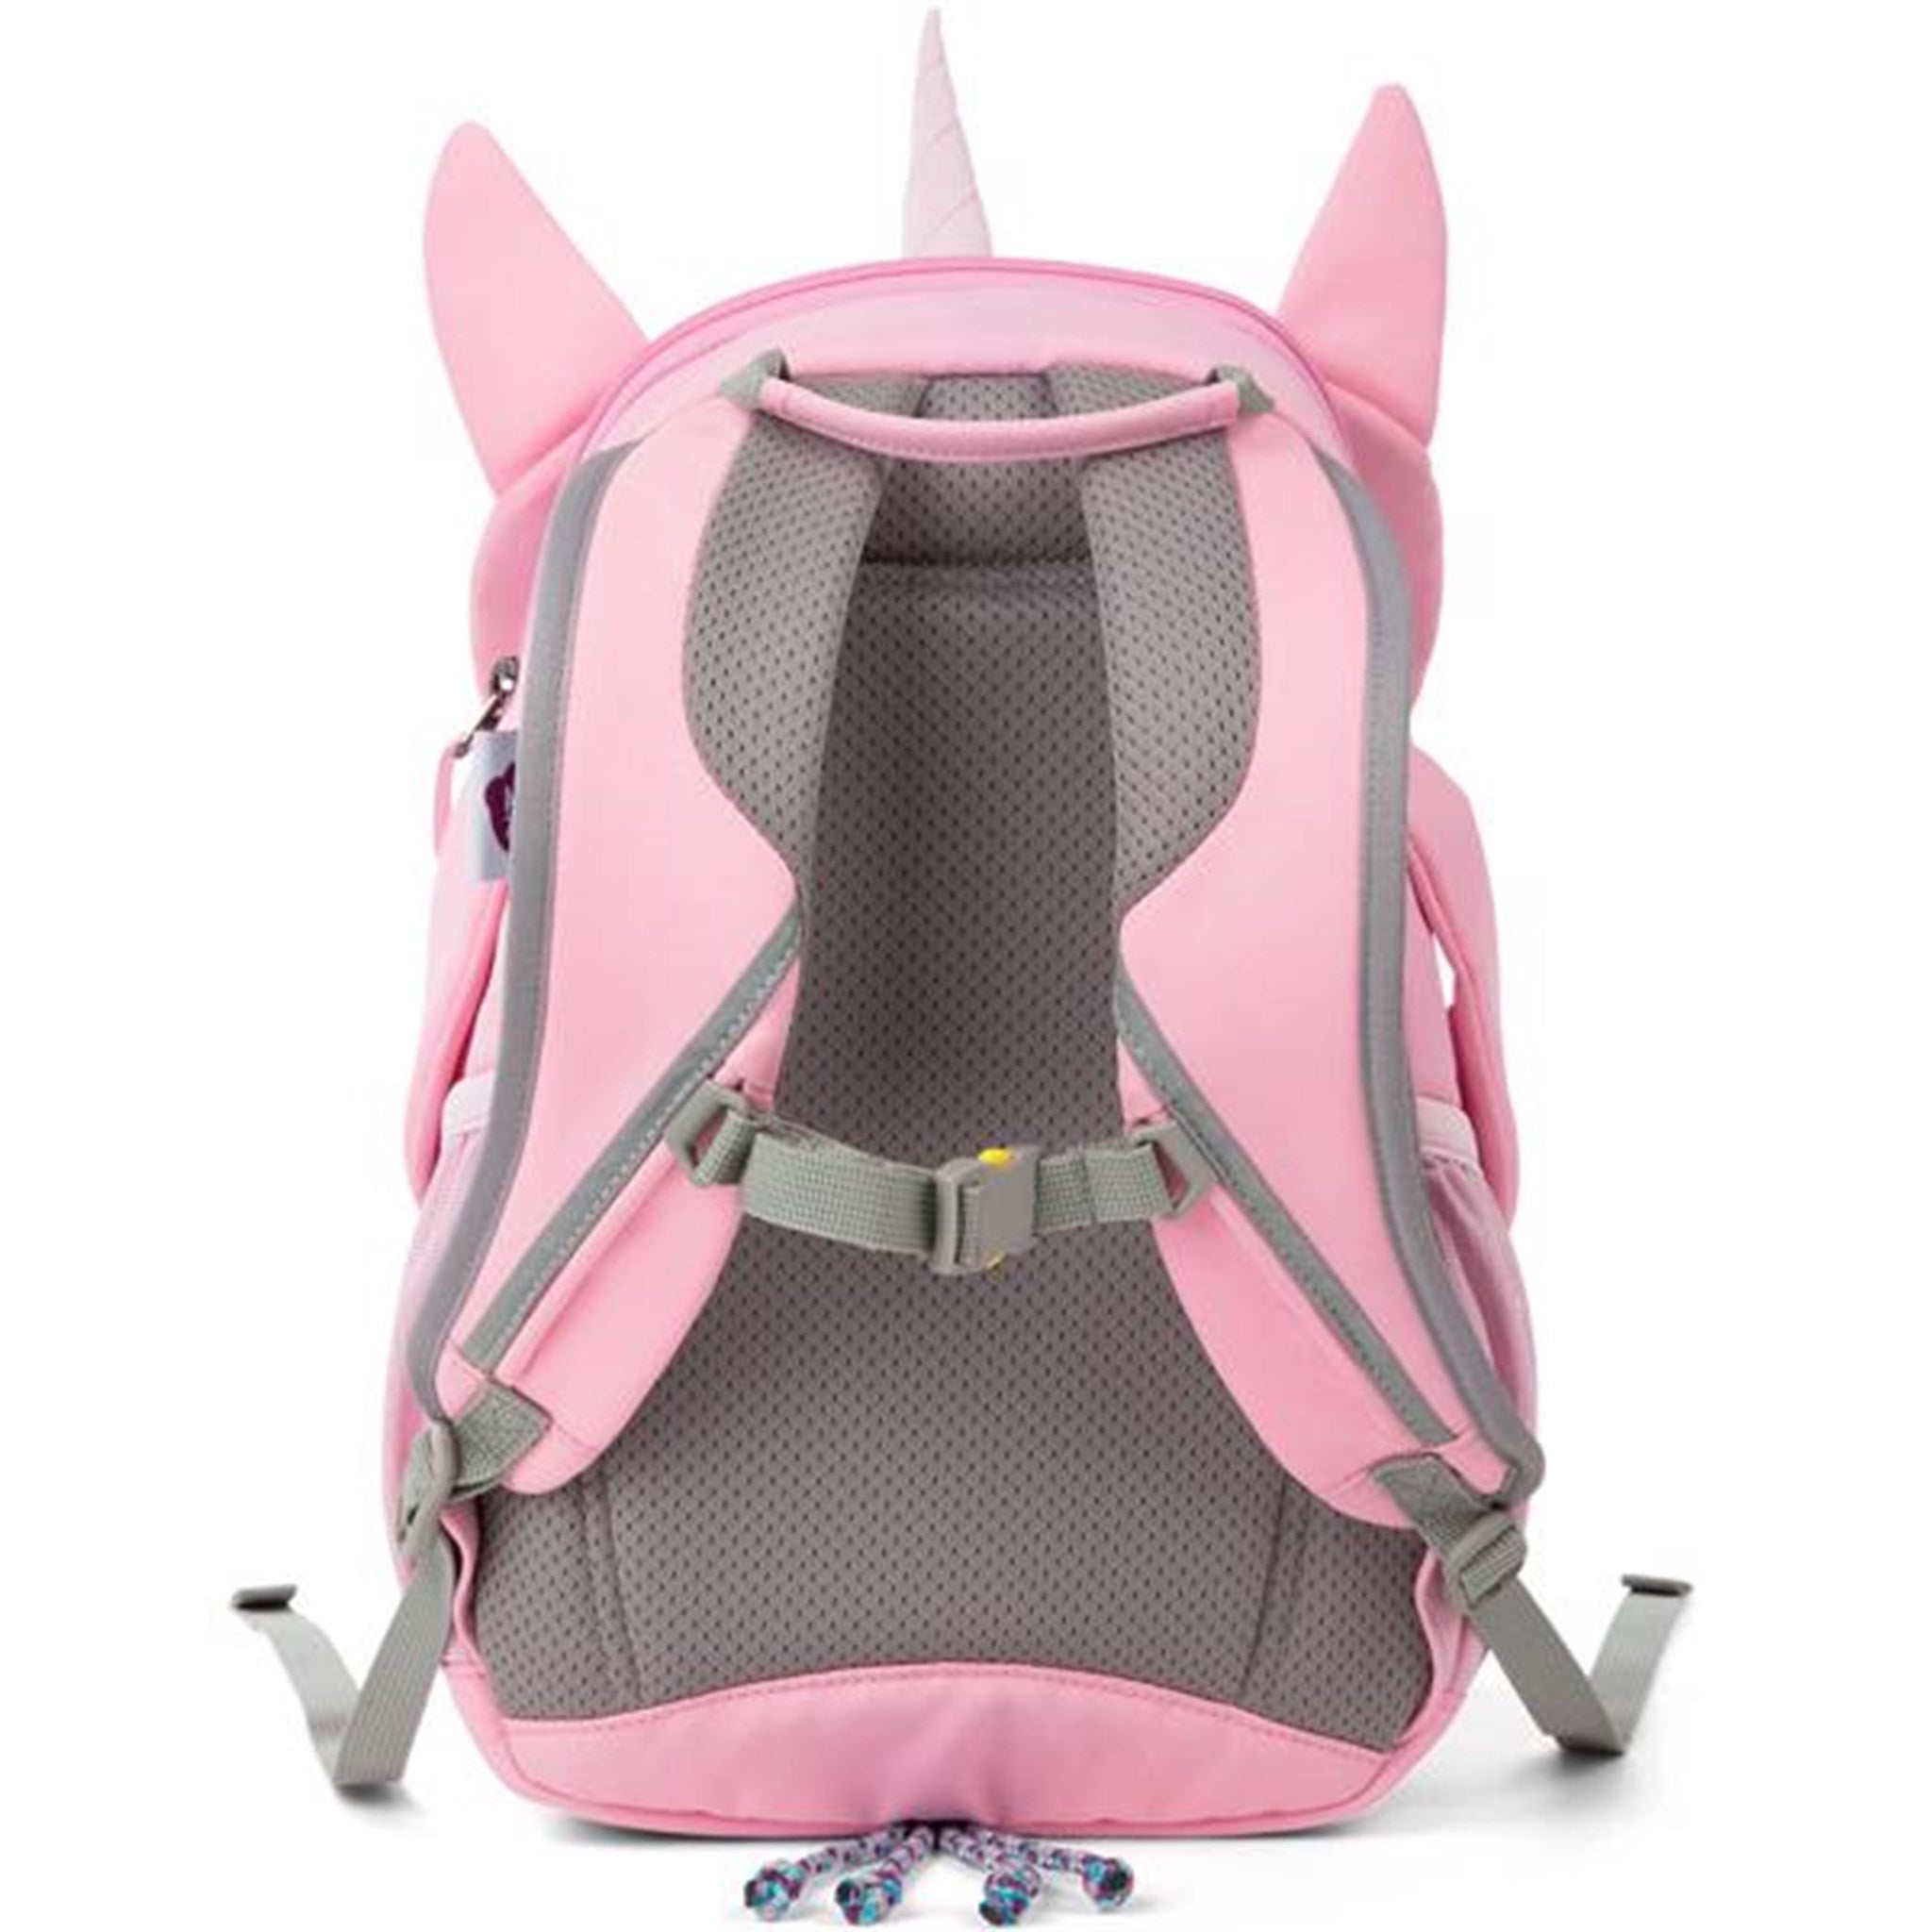 Affenzahn Kindergarten Backpack Large Pink Ursula Unicorn 2